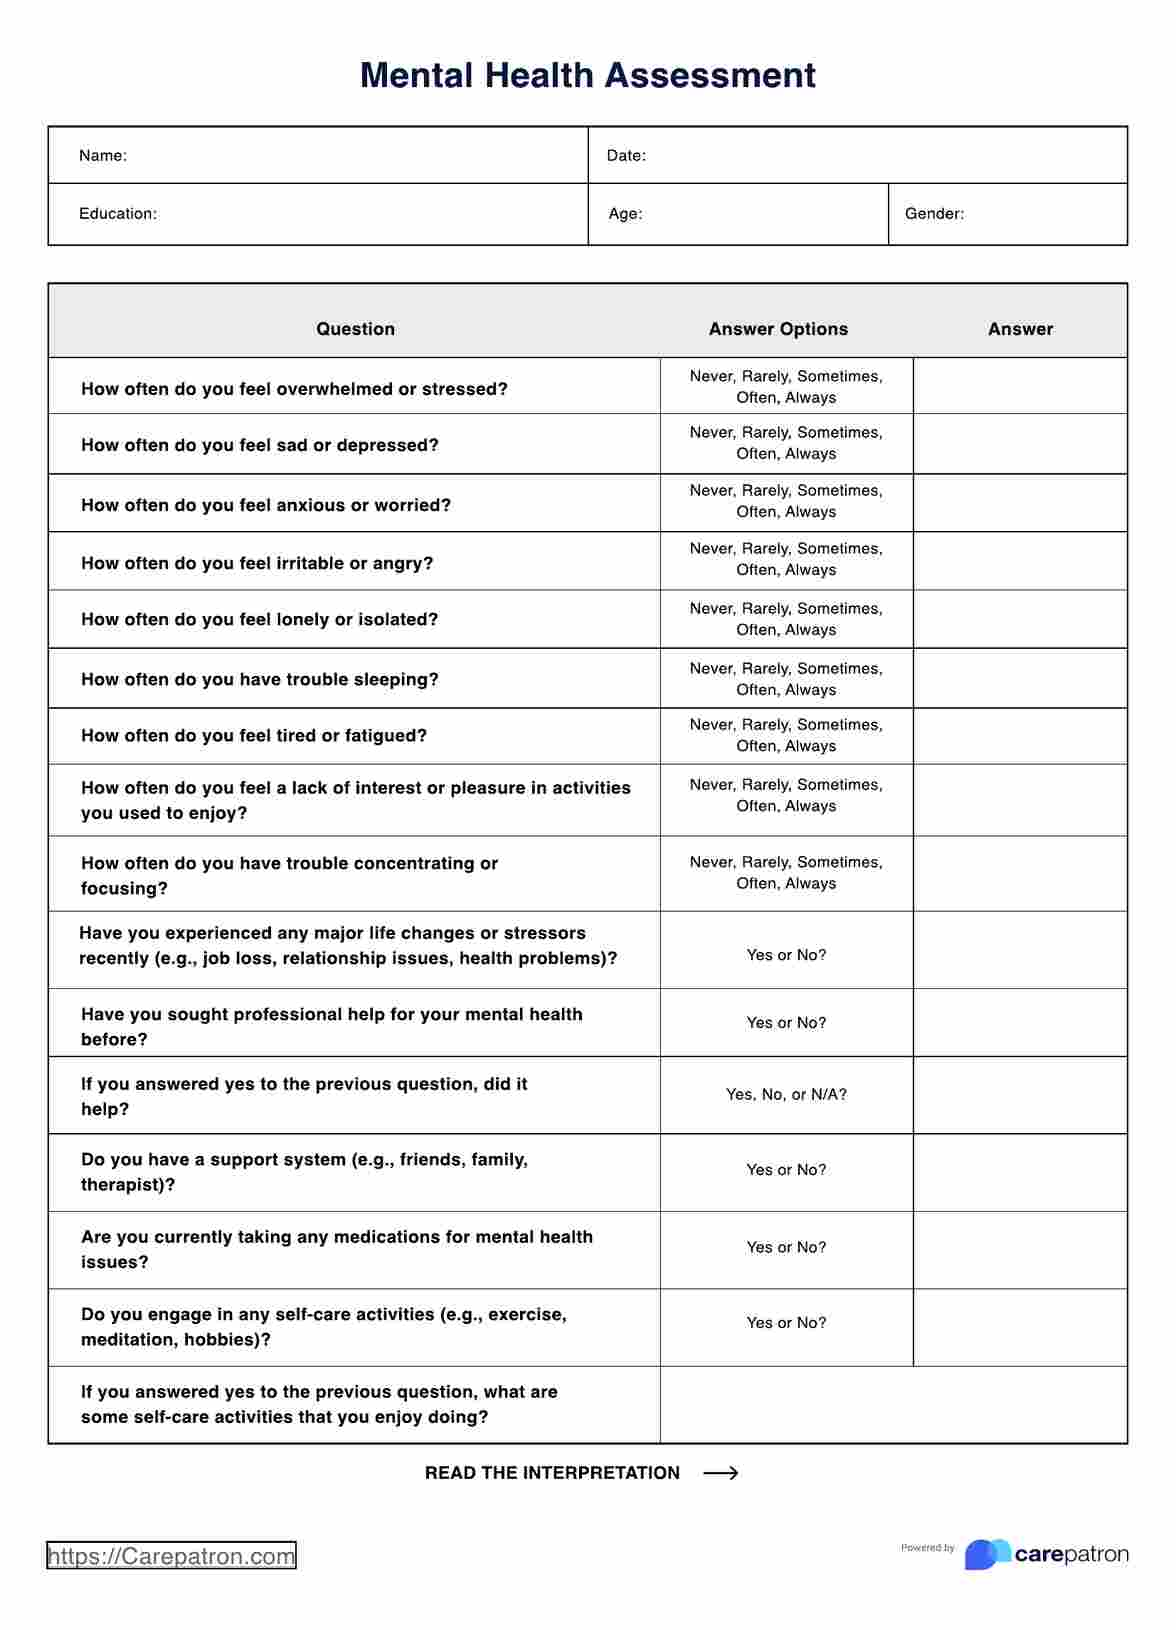 Mental Health Assessment PDF Example